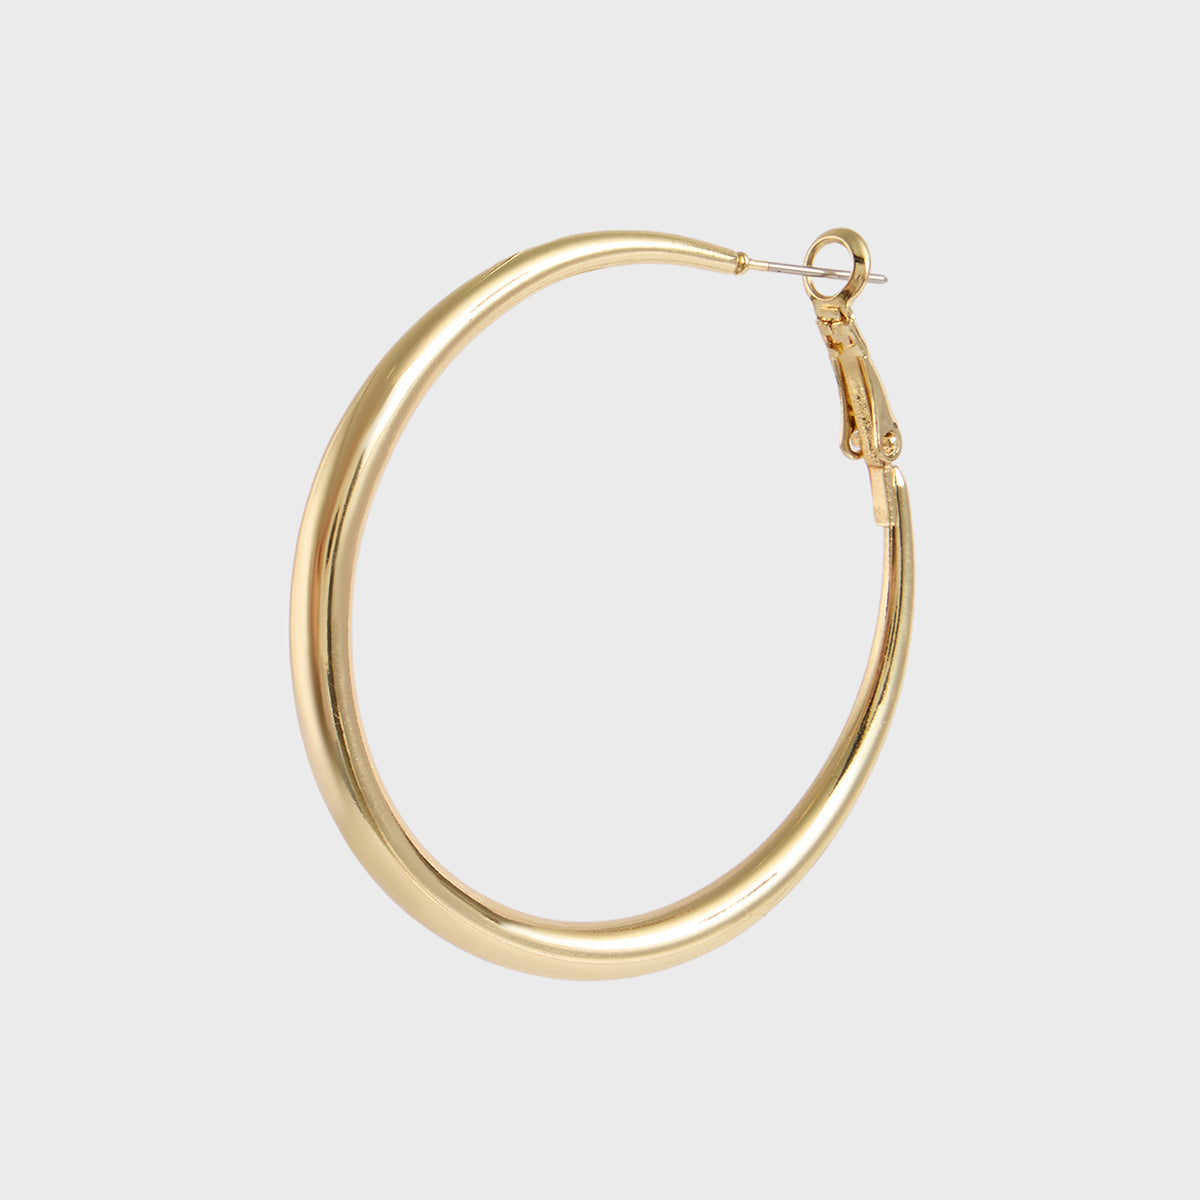 Petite Pavé Huggie Hoop Earrings in 18K Yellow Gold with Diamonds, 14mm |  David Yurman